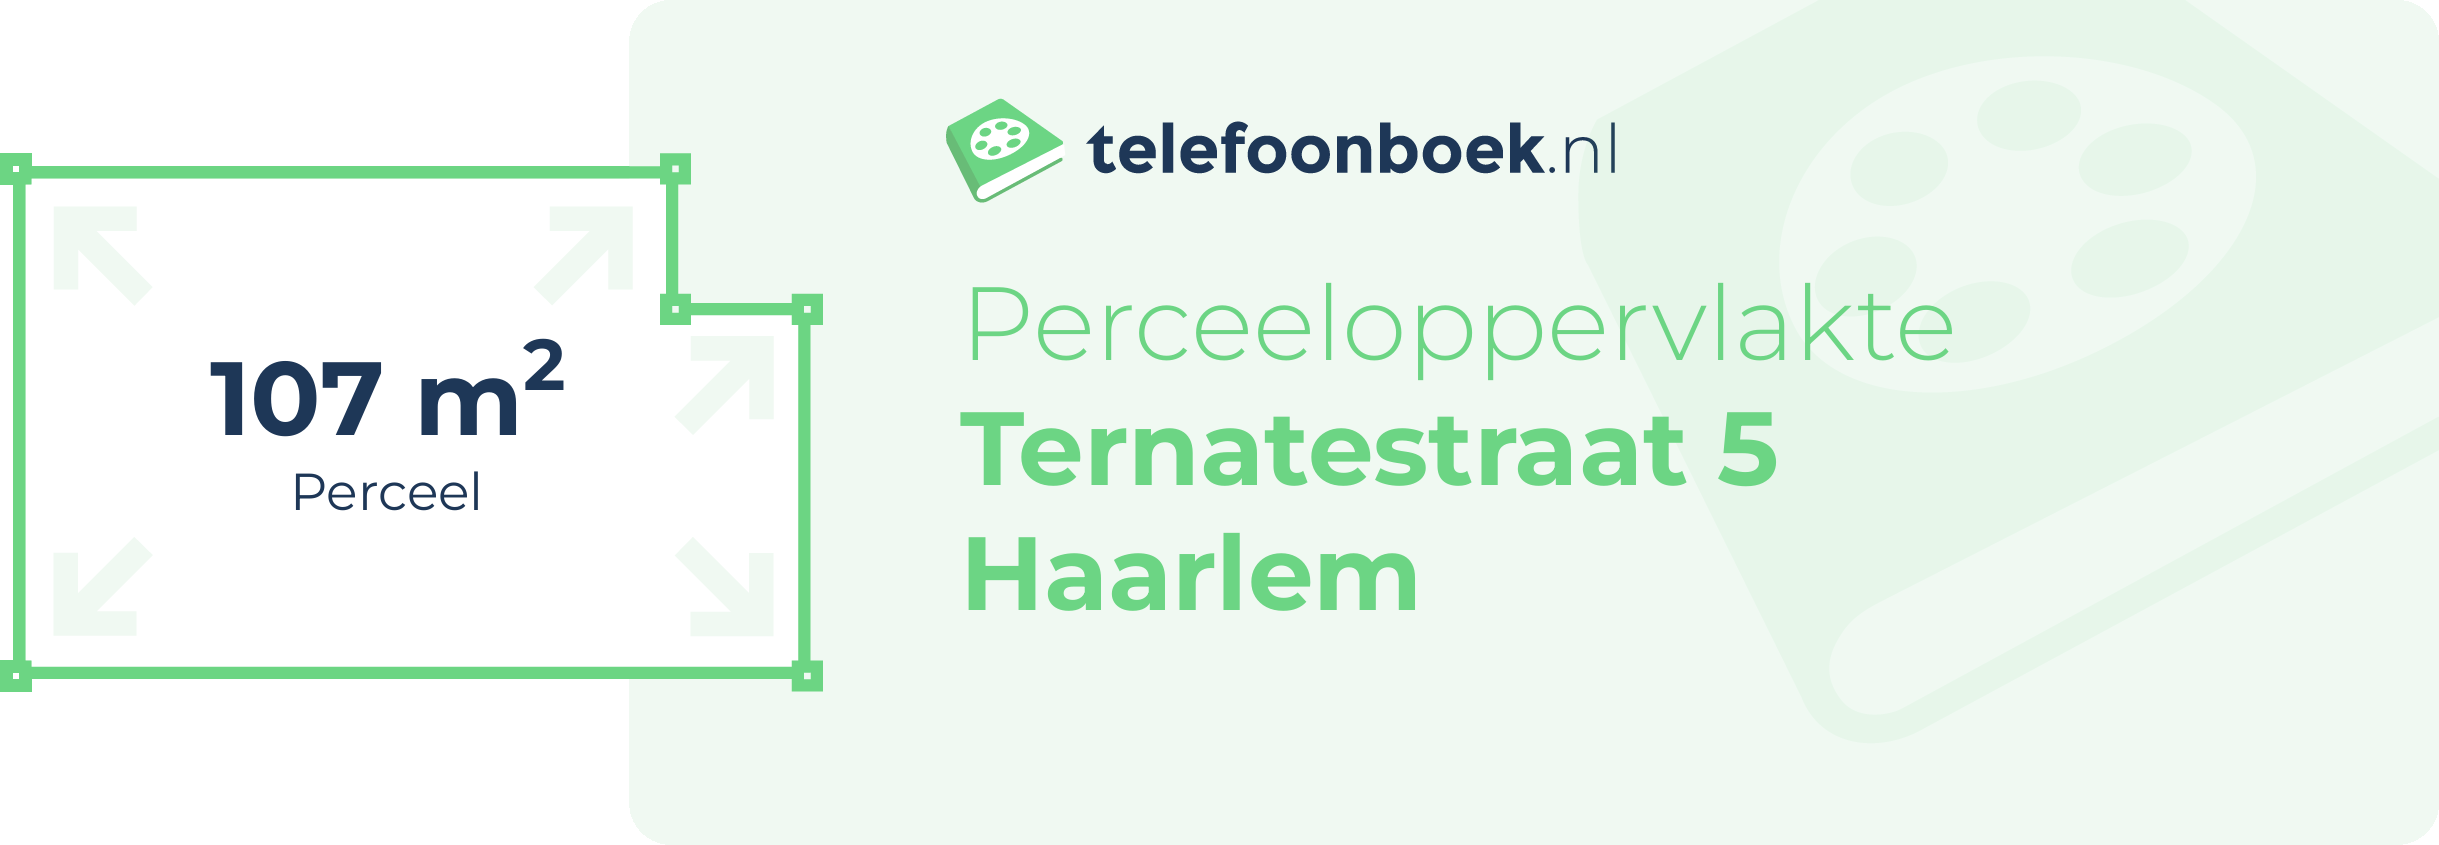 Perceeloppervlakte Ternatestraat 5 Haarlem